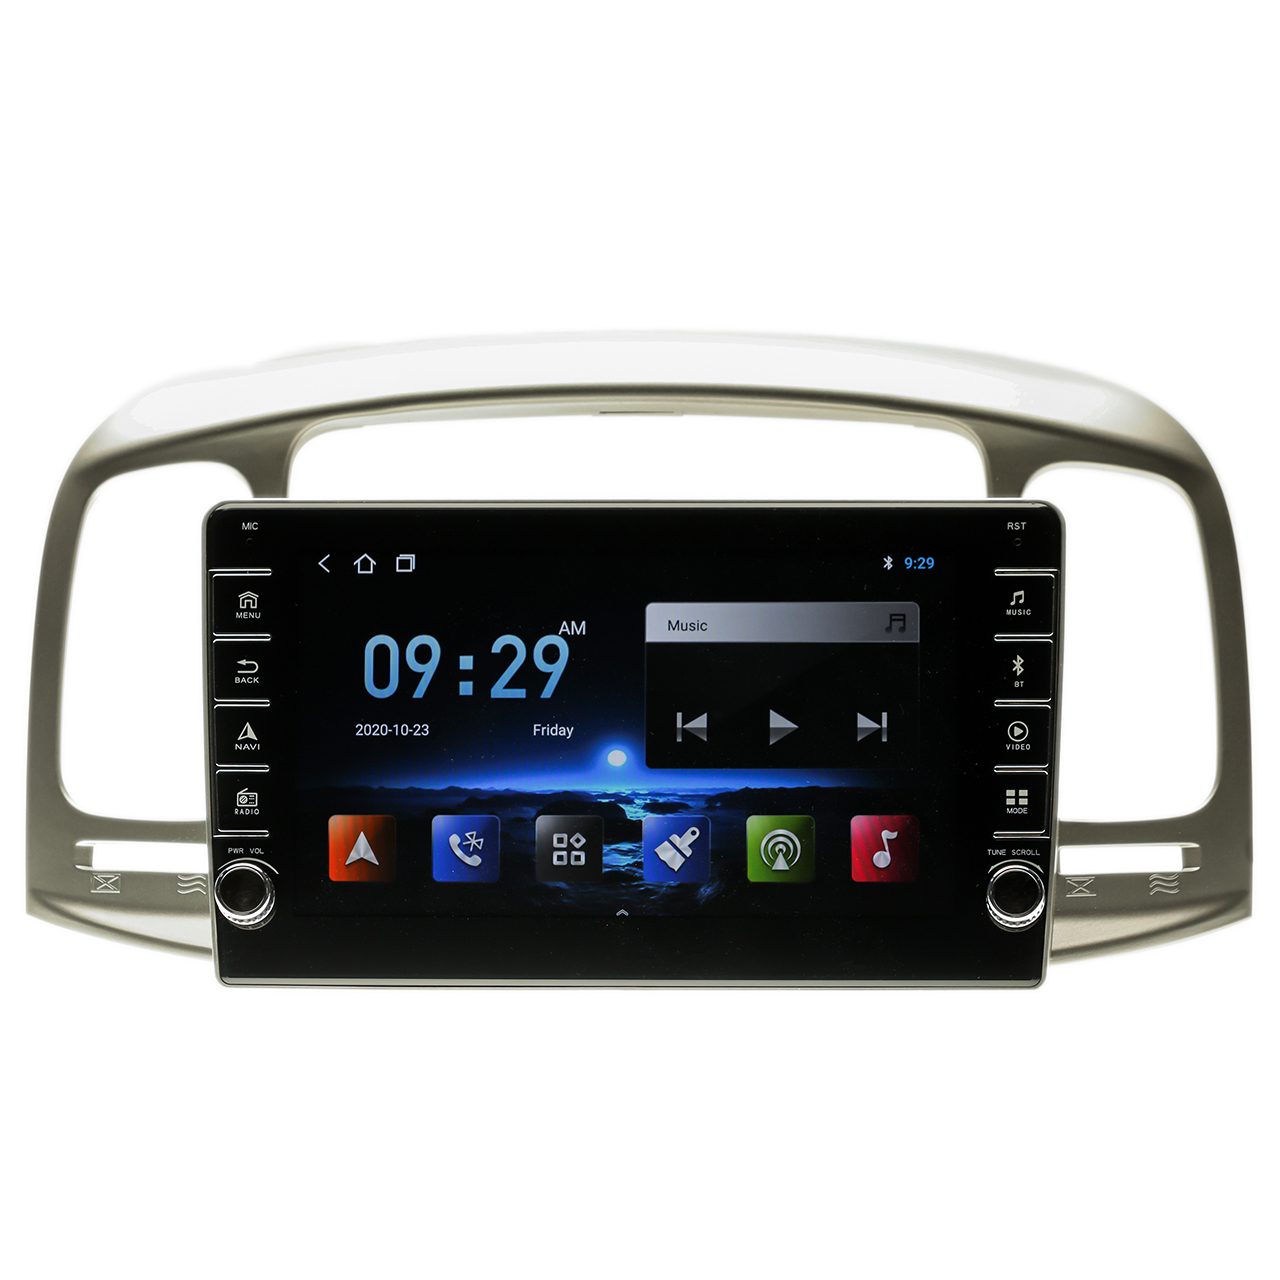 Navigatie AUTONAV PLUS Android GPS Dedicata Hyundai Accent 2005-2011, Model PRO Memorie 16GB Stocare, 1GB DDR3 RAM, Butoane Laterale Si Regulator Volum, Display 8